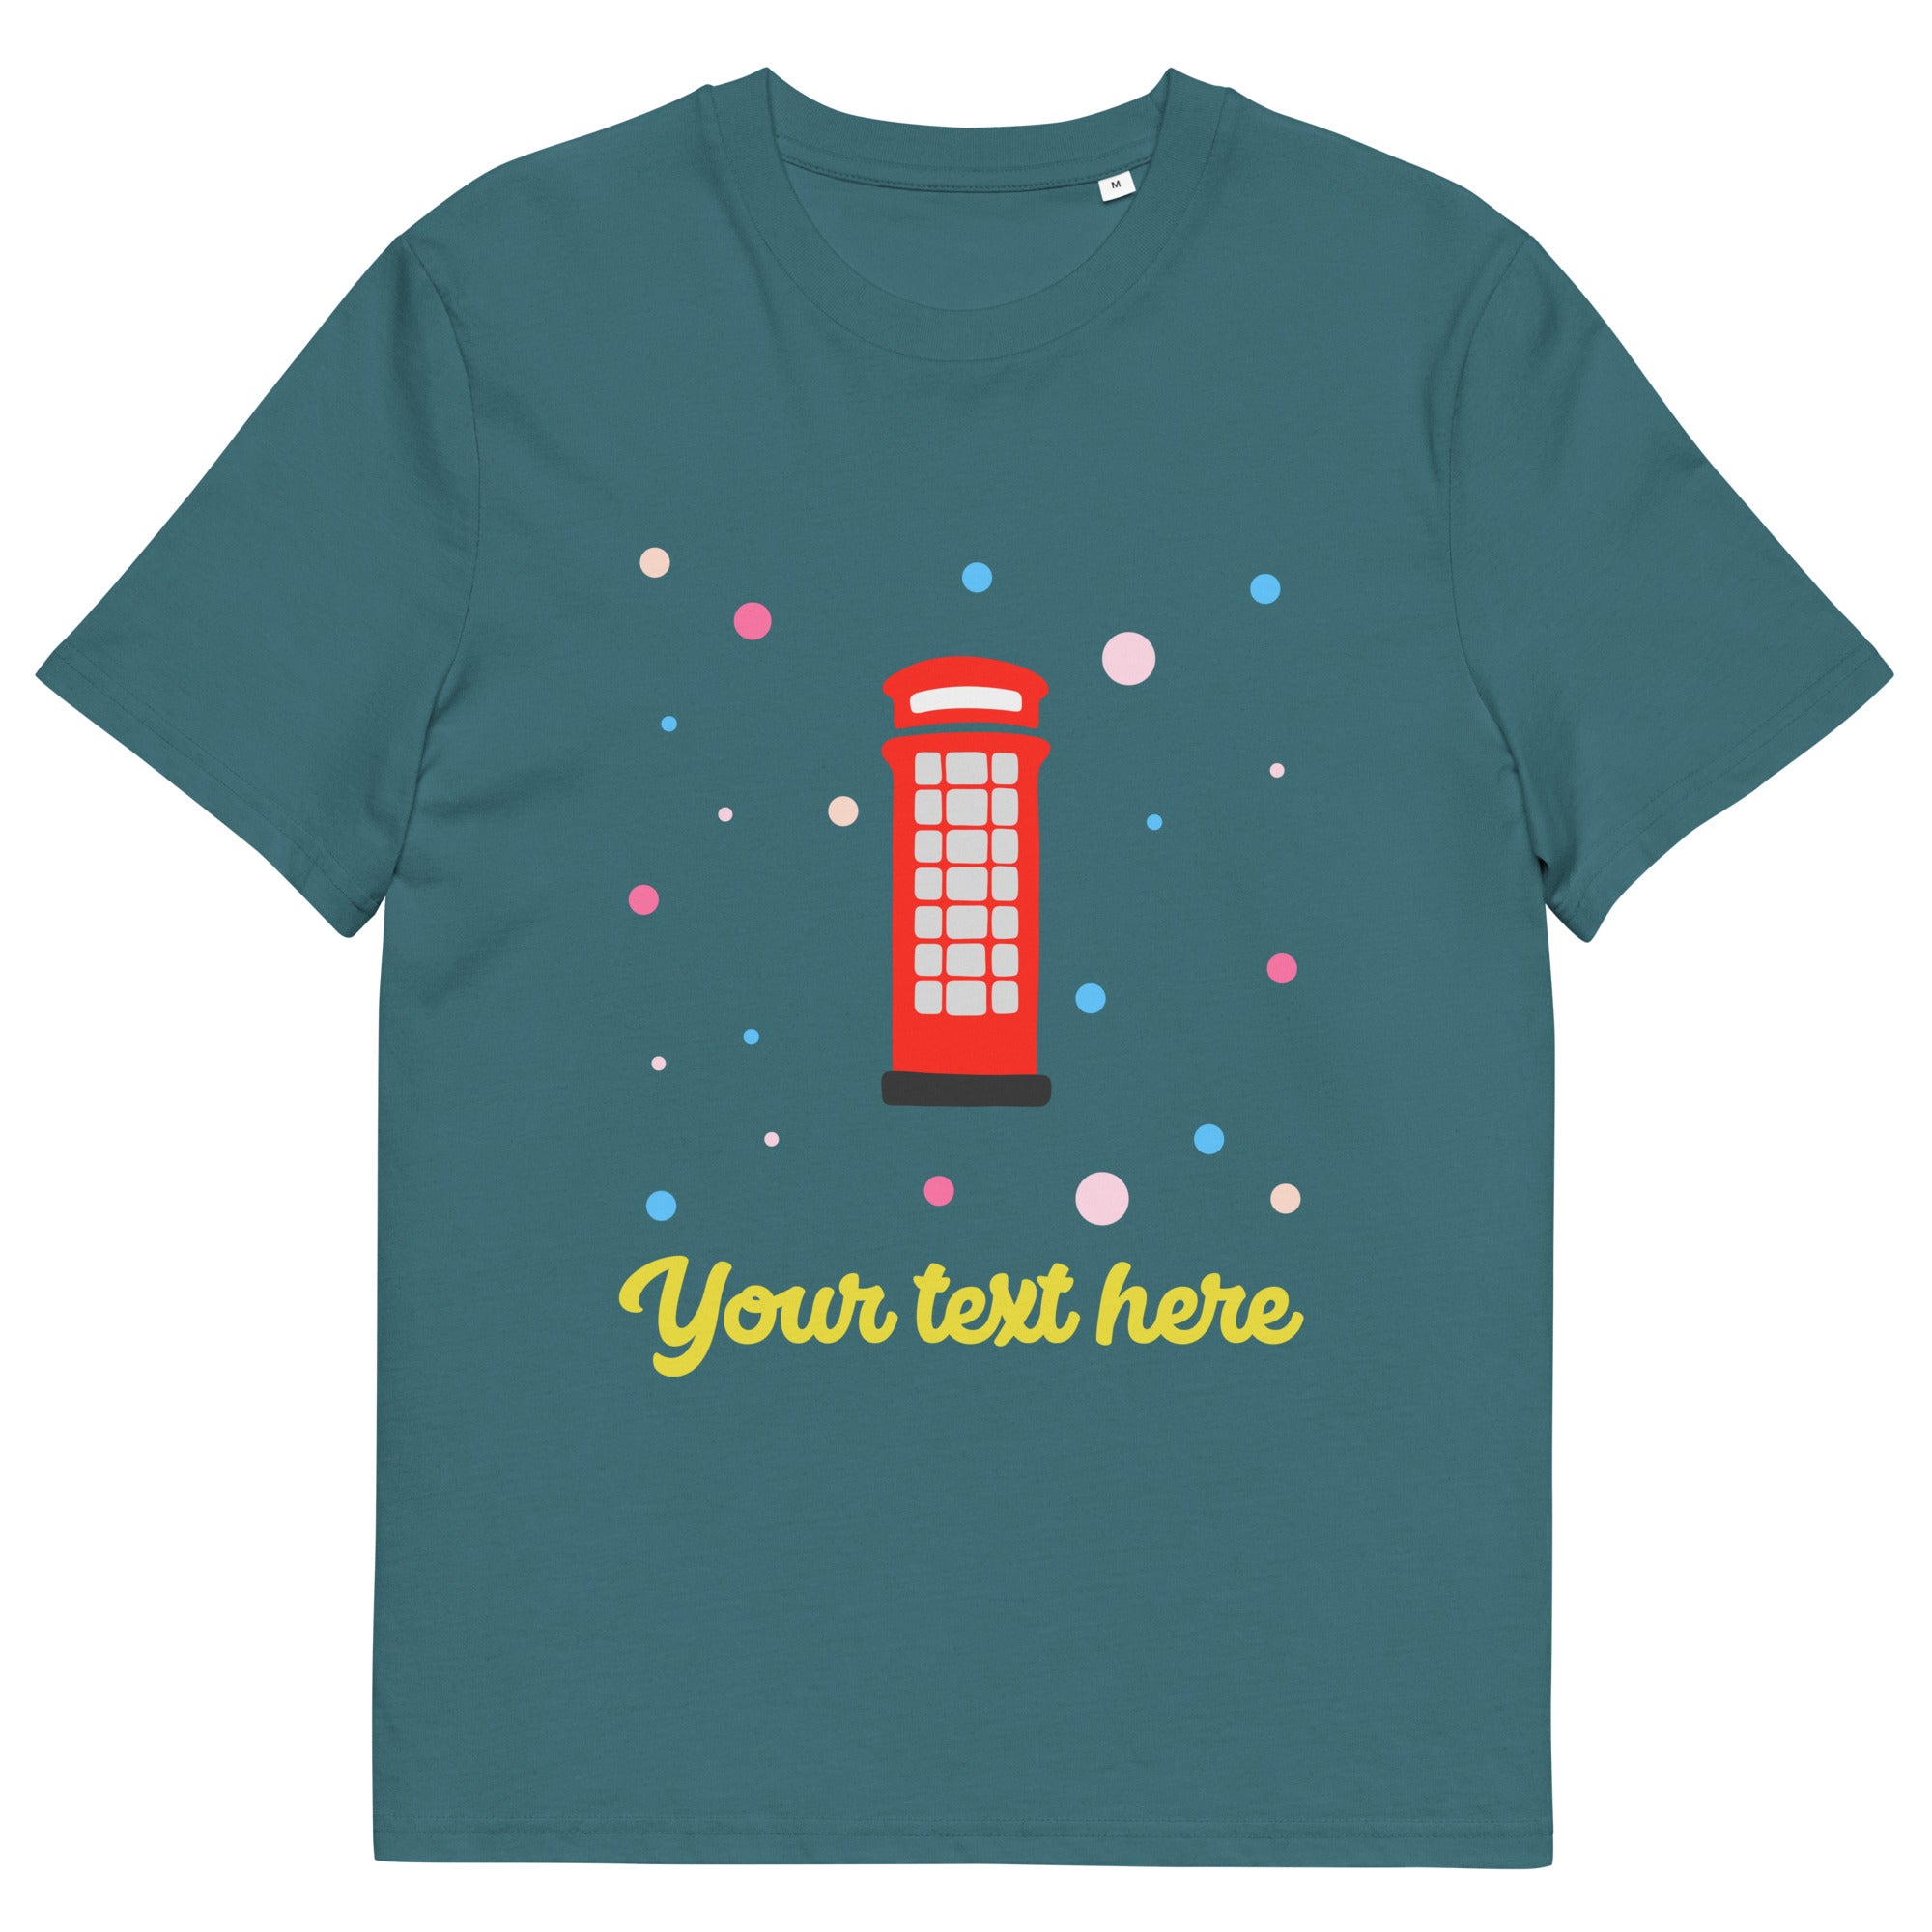 Personalised Custom Text - Organic Cotton Adults Unisex T-Shirt - London Doodles - Telephone Box - Stargazer